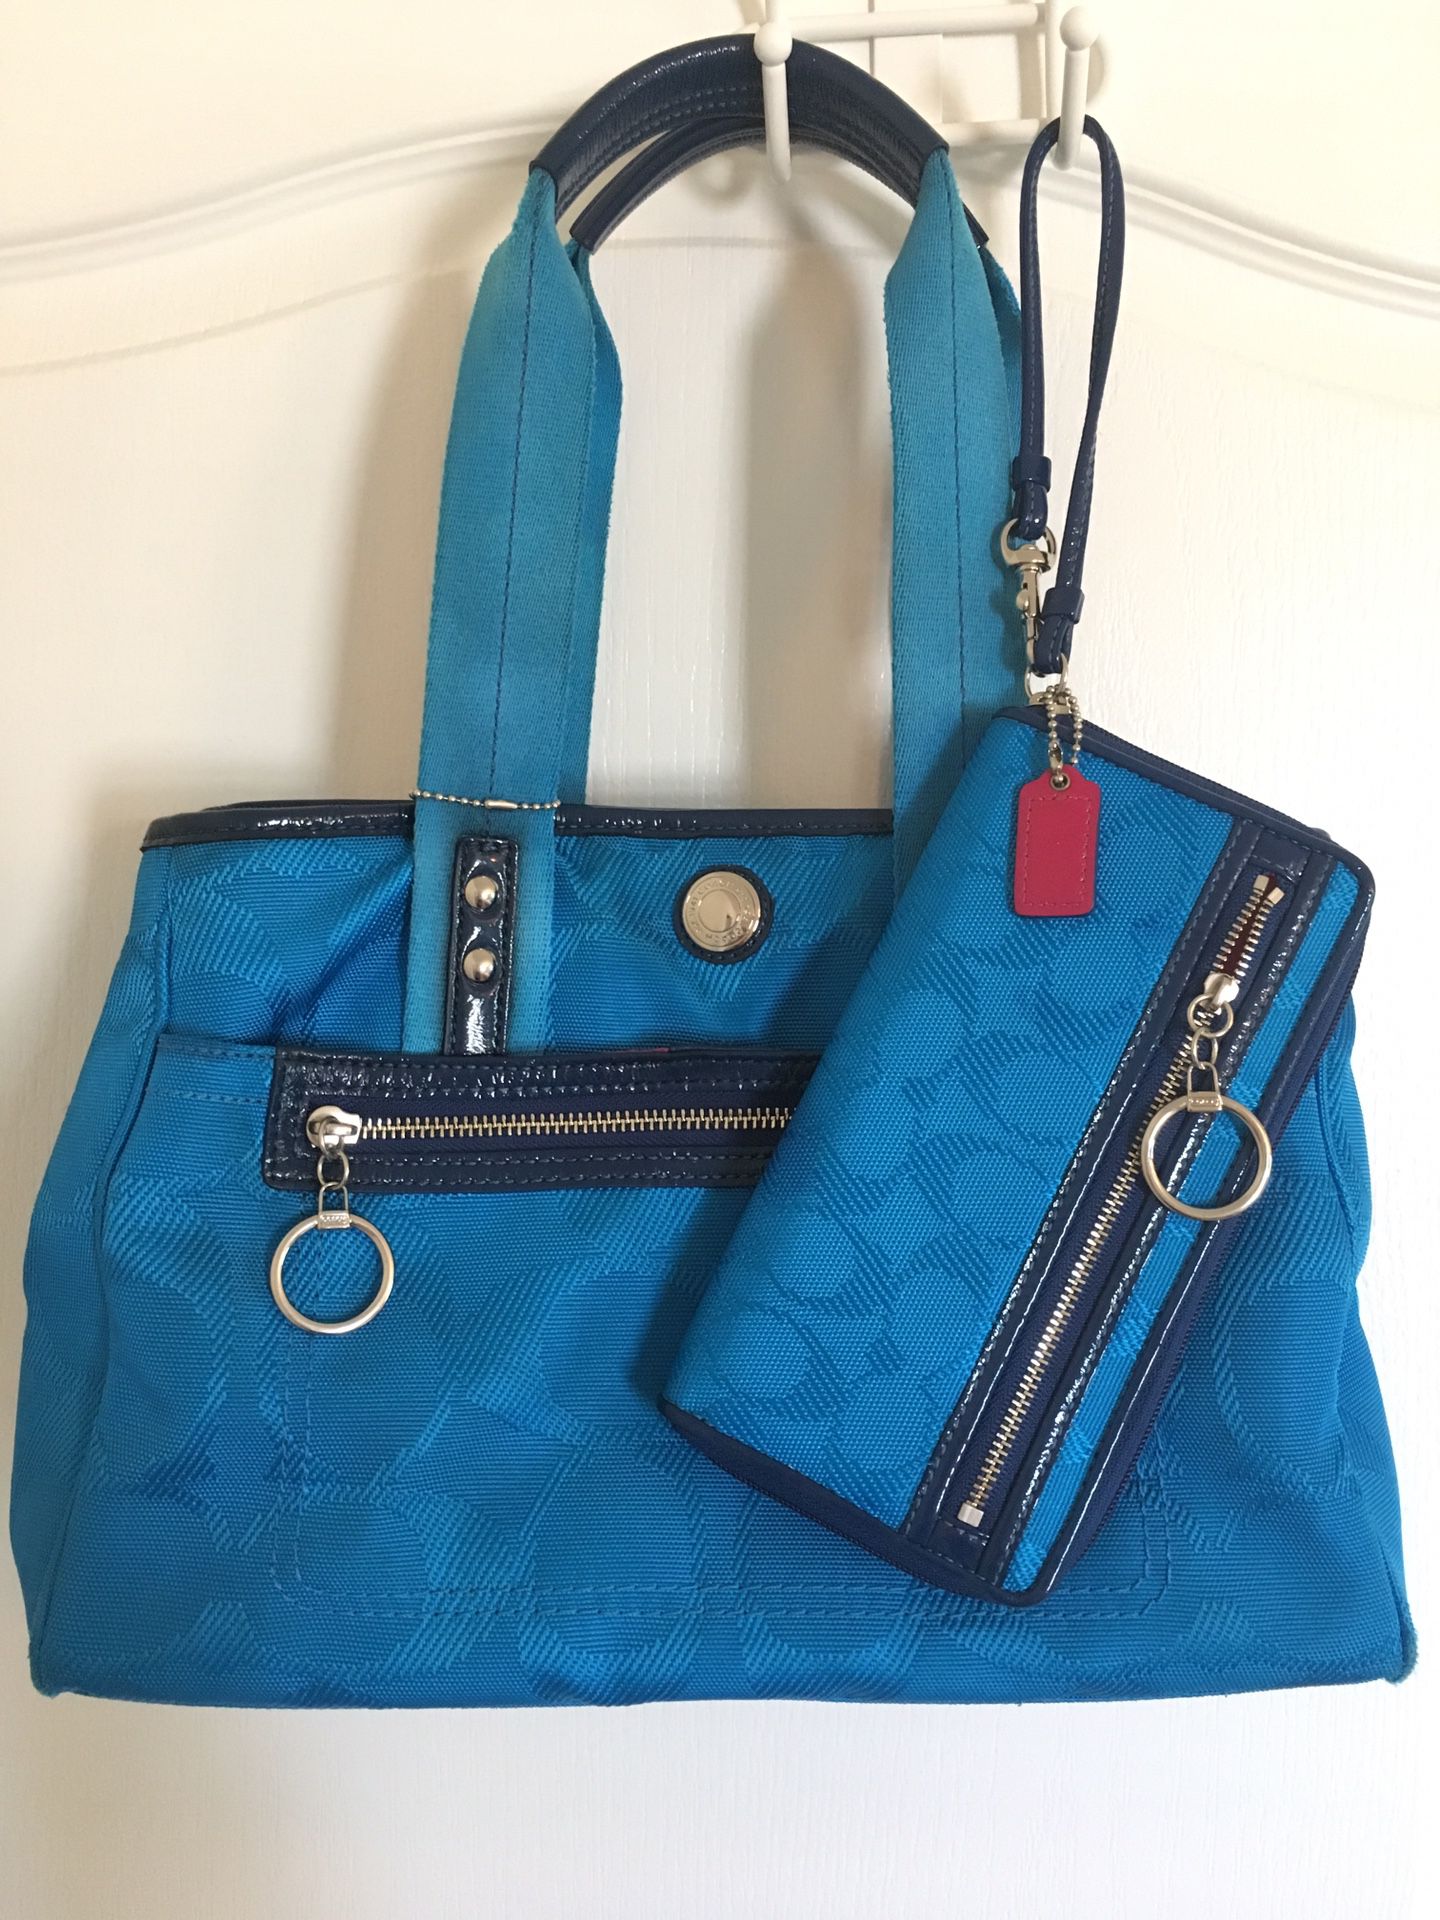 Beautiful Blue Coach bag with wristlet